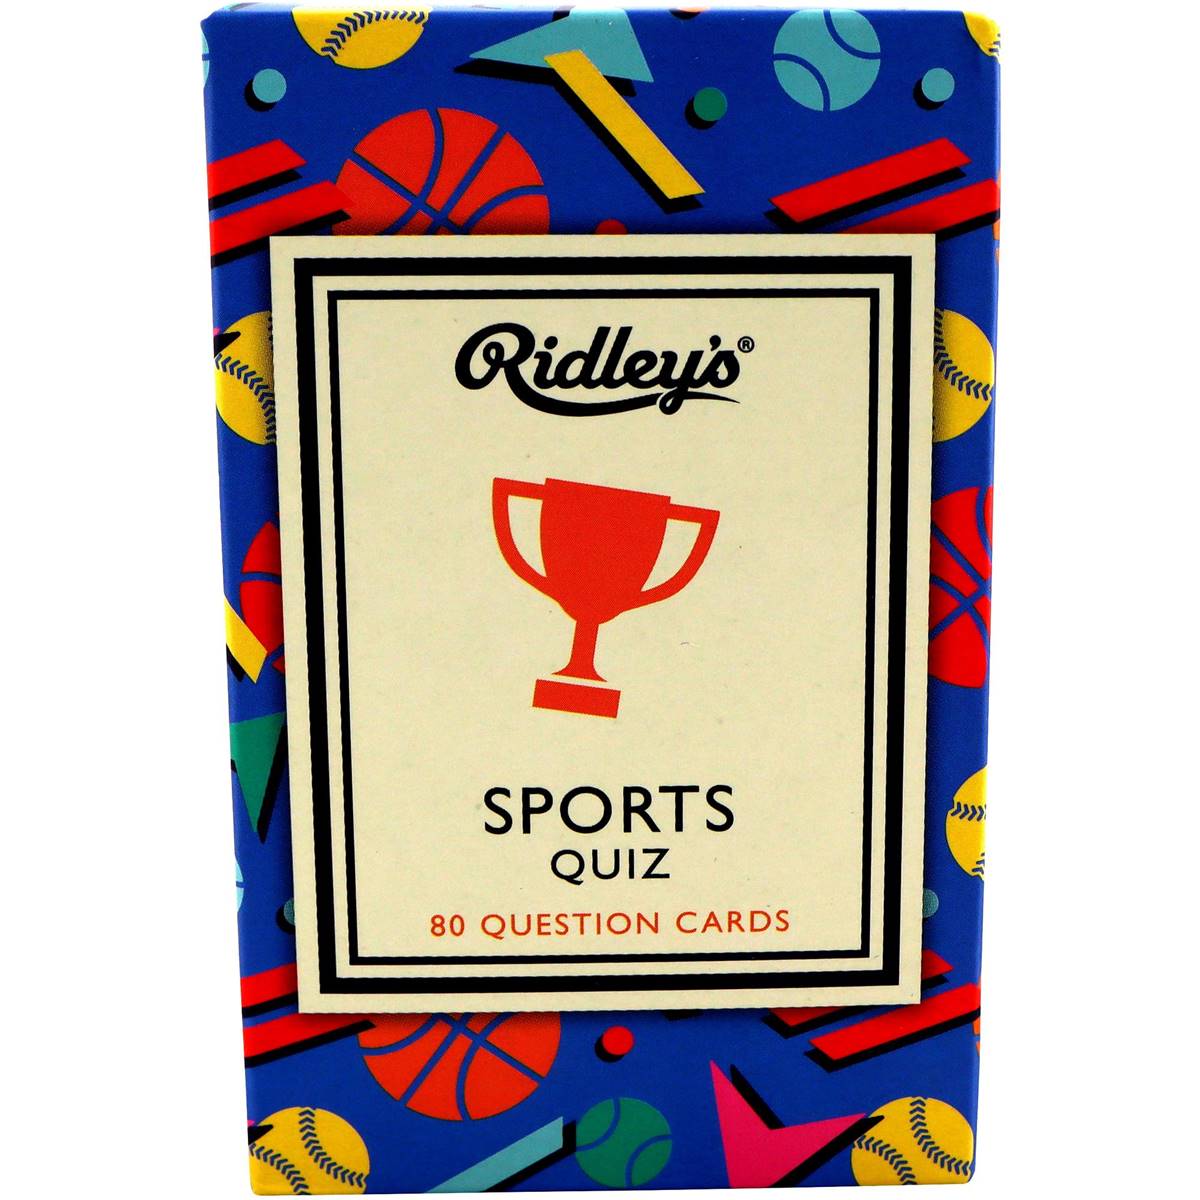 Ridley's Sports Trivia Quiz